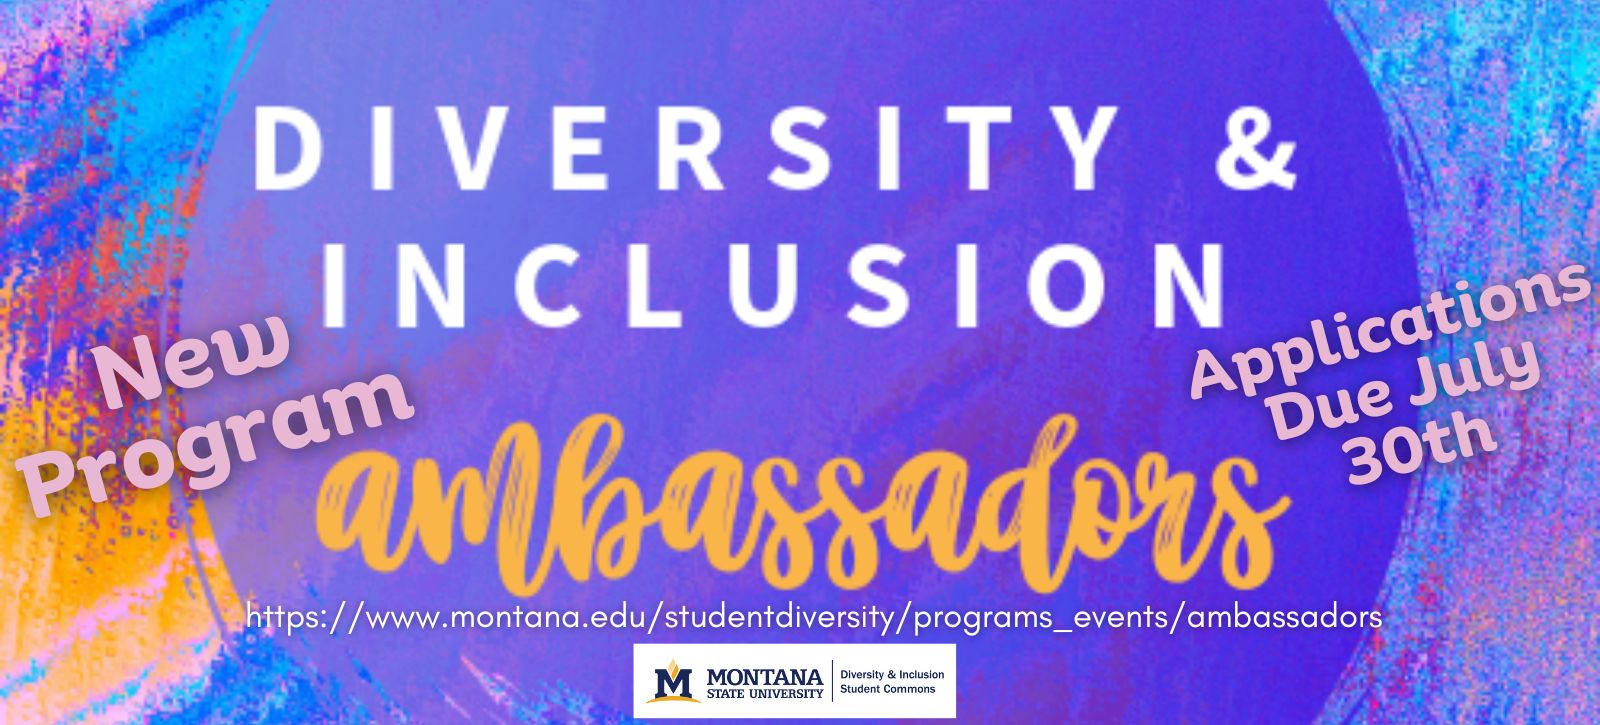 Diversity & Inclusion Ambassador - New Program applications due July 30, 2023